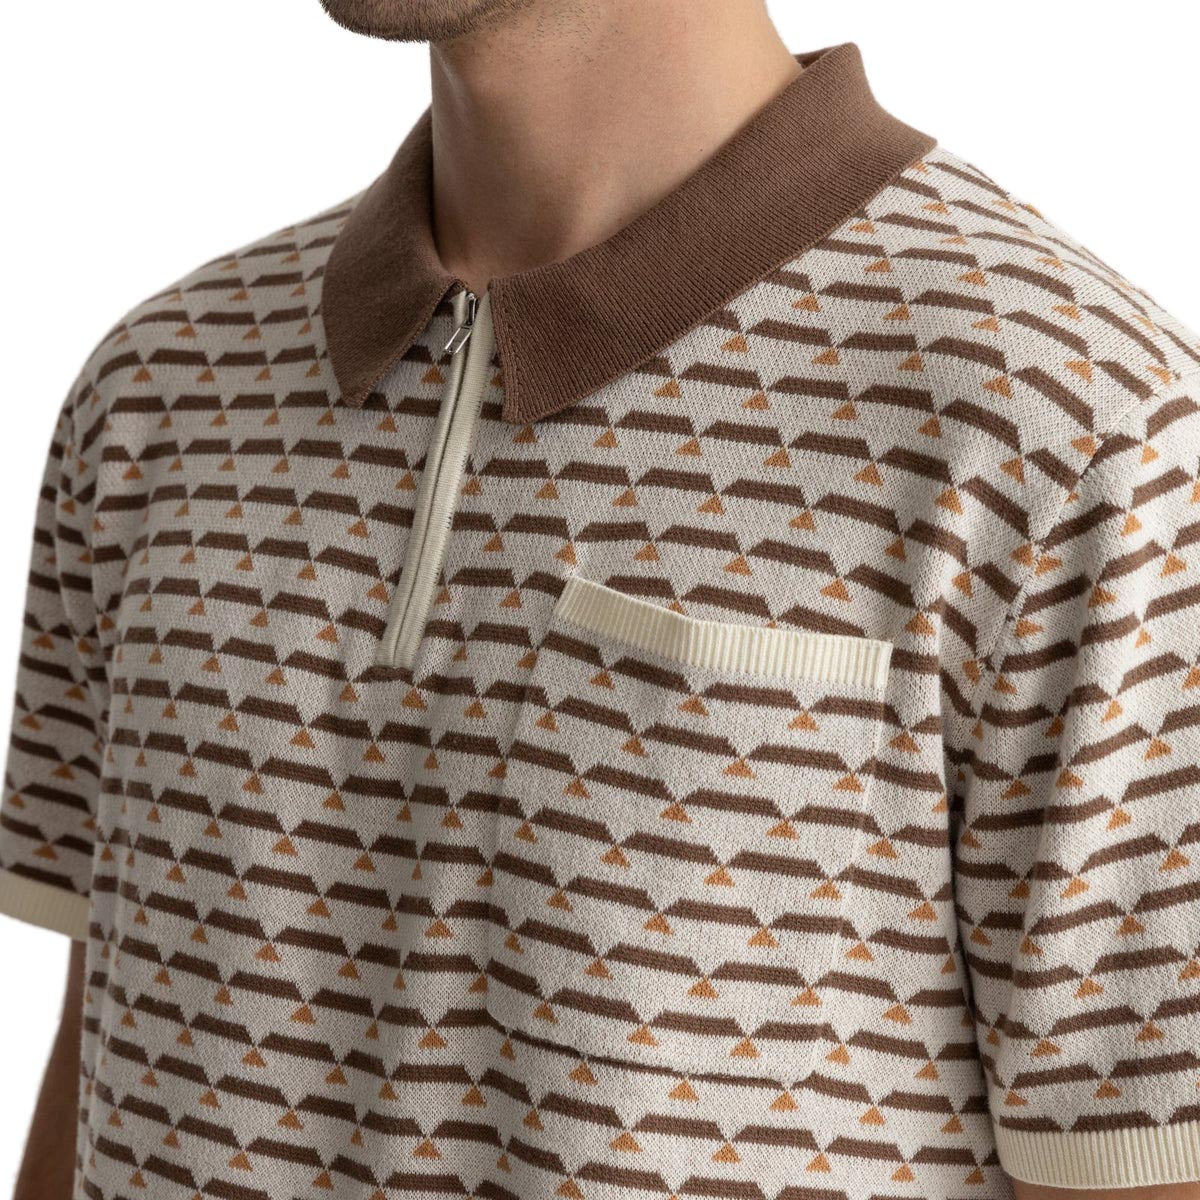 Rhythm Jacquard Polo Shirt - Natural image 3